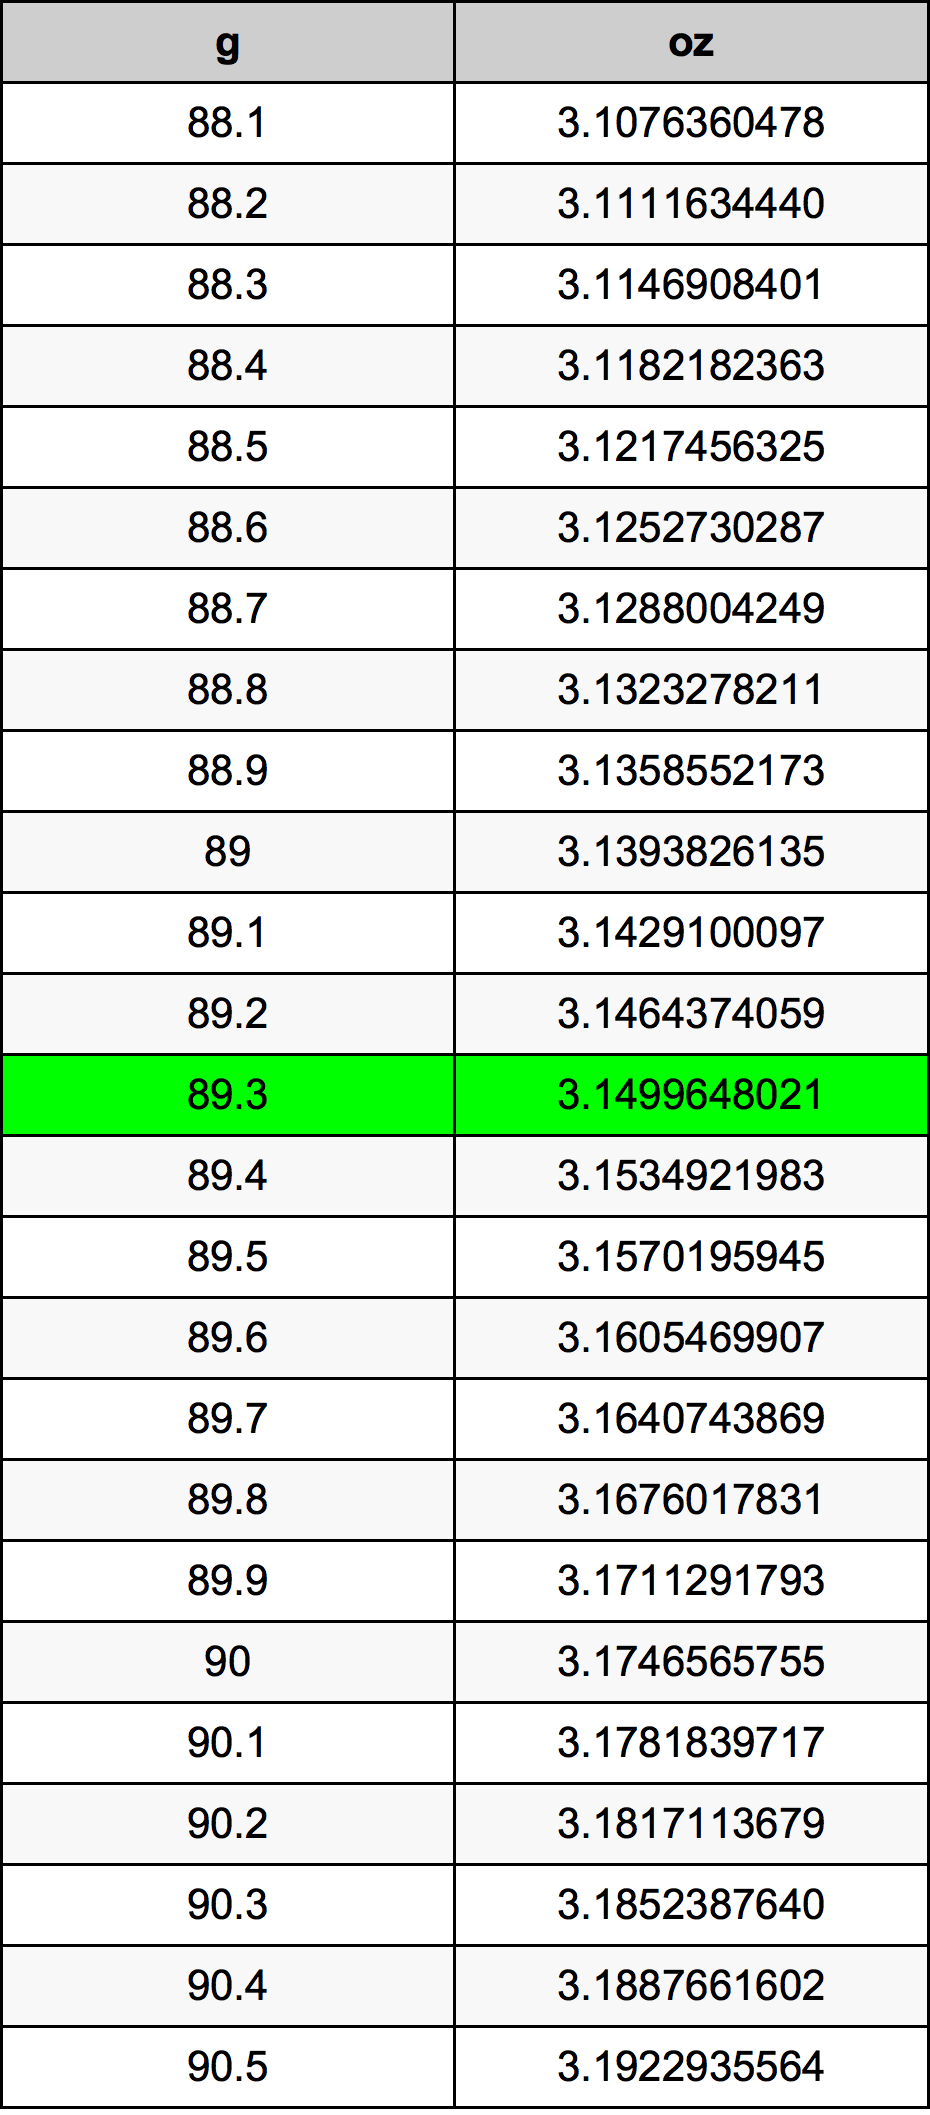 89.3 غرام جدول تحويل